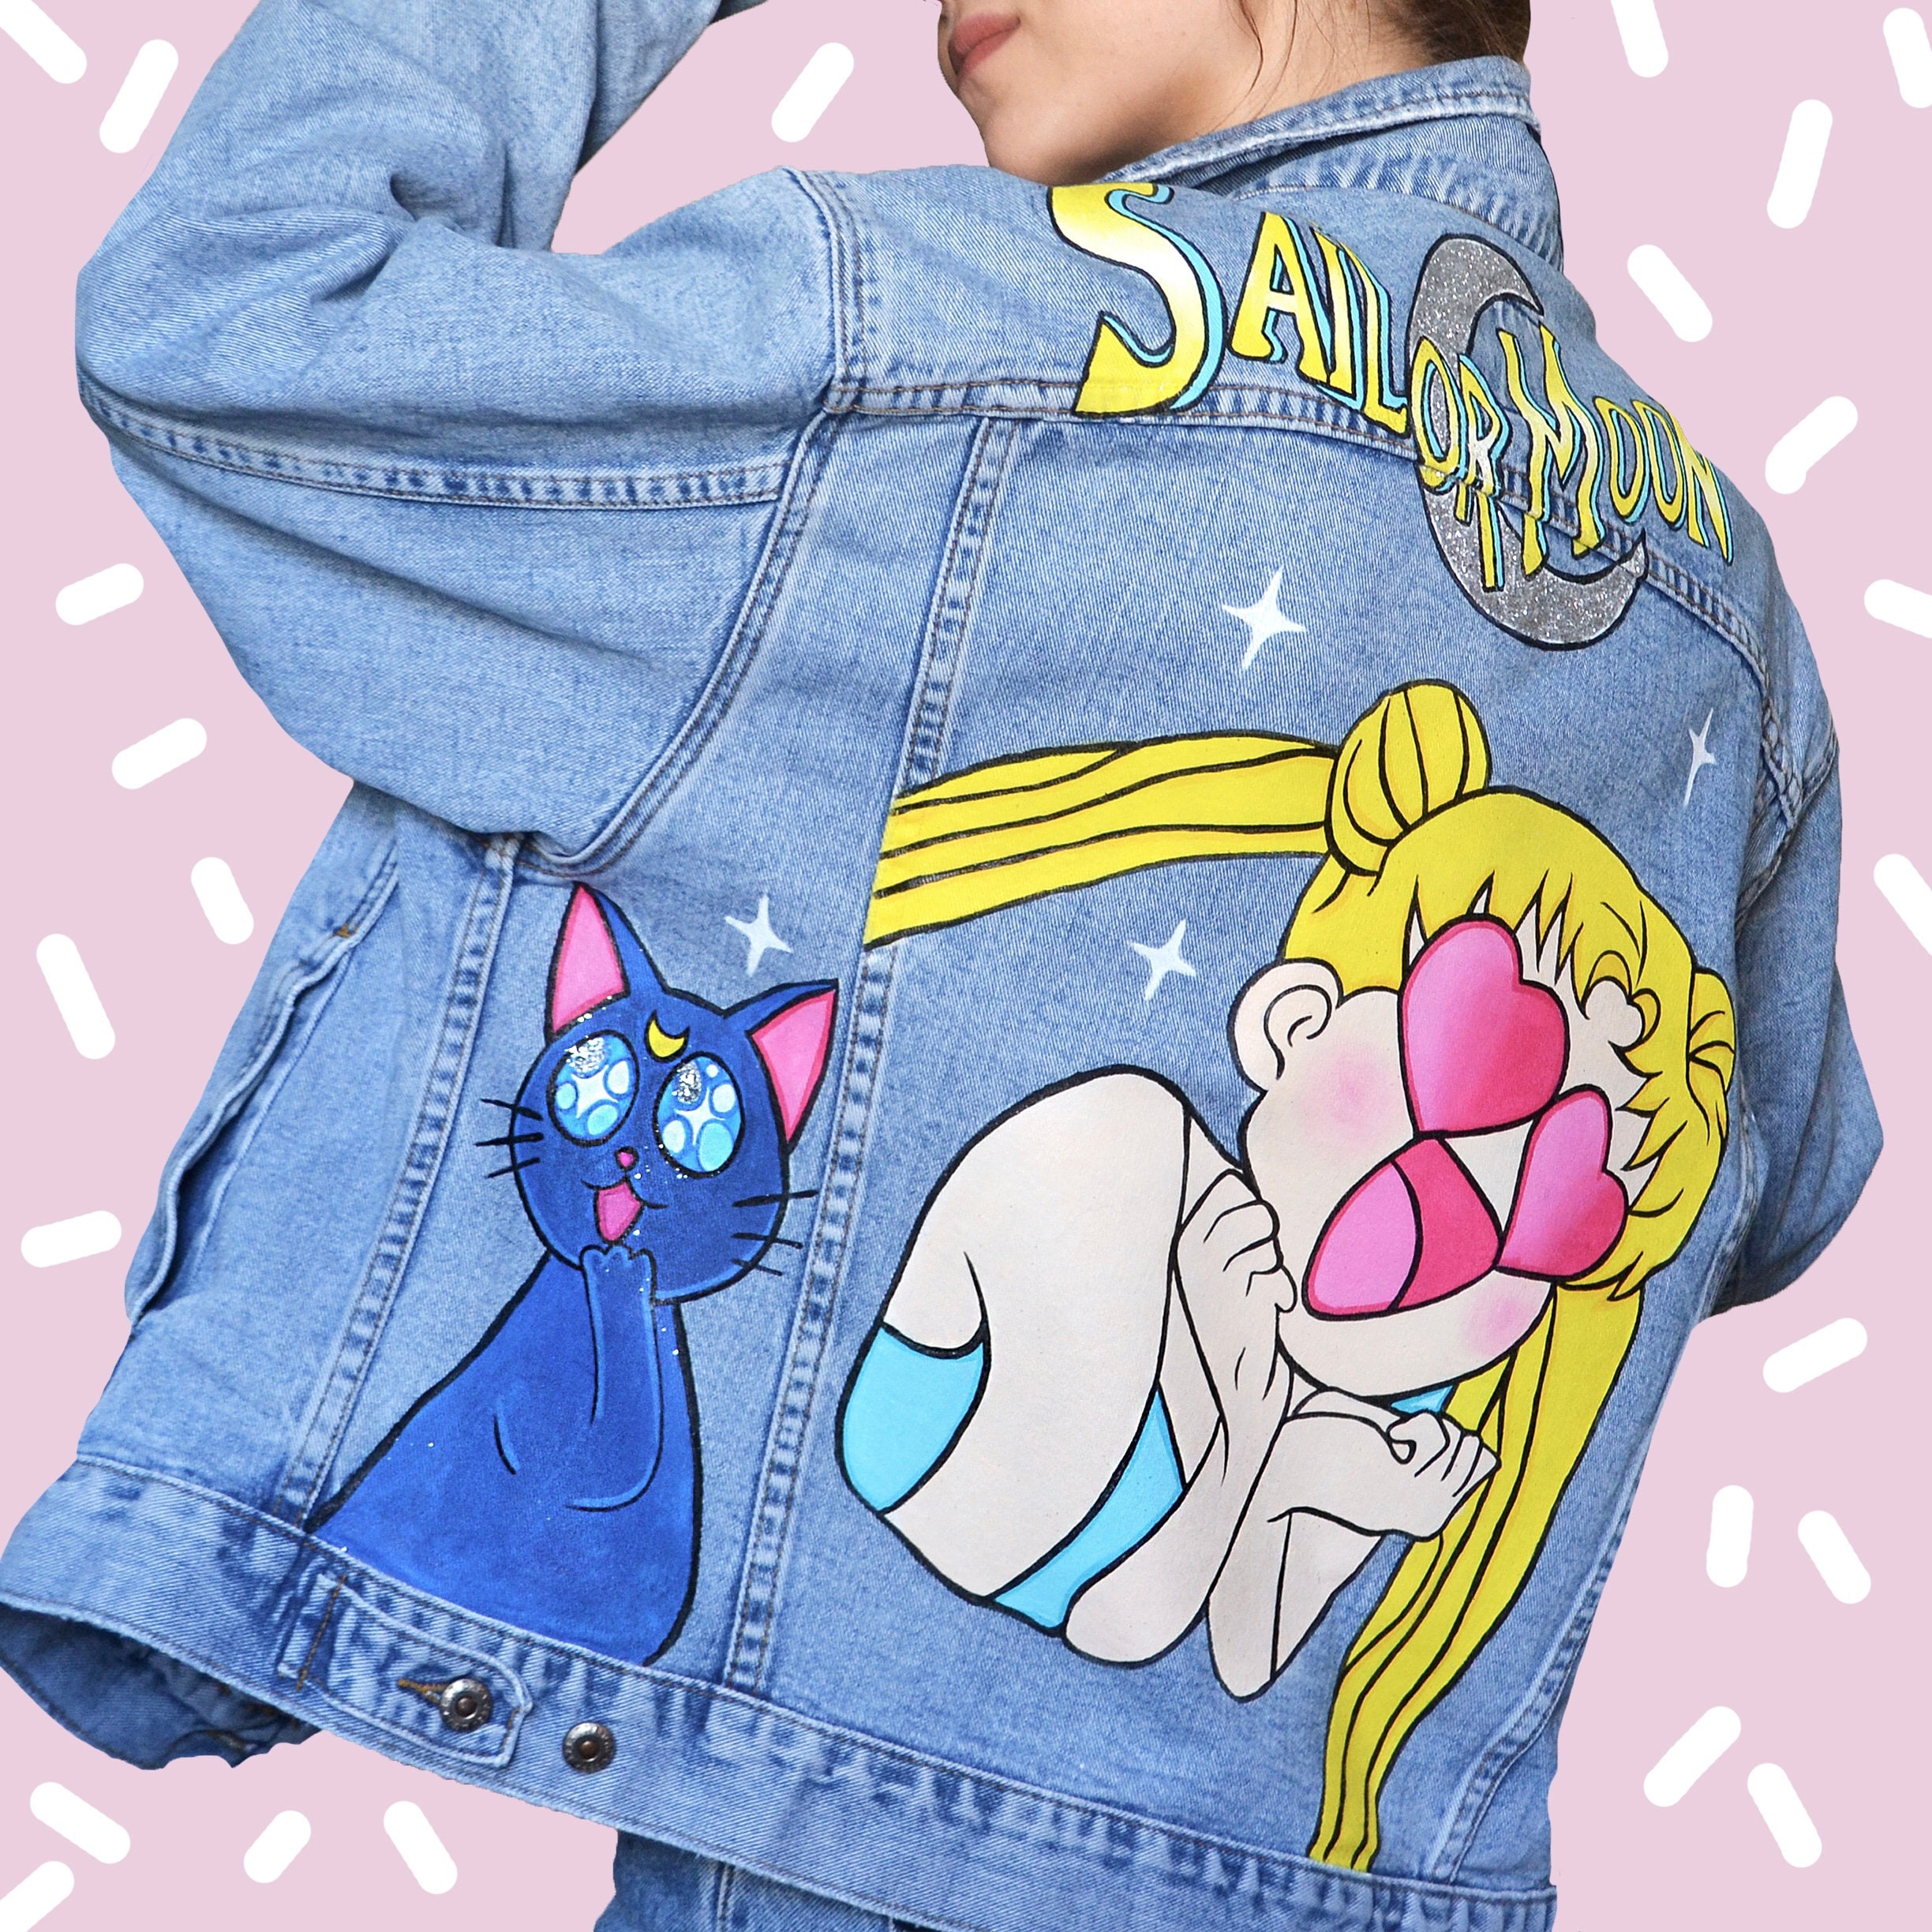 Sailor moon hand painted denim jacket, custom denim jacket, sailor